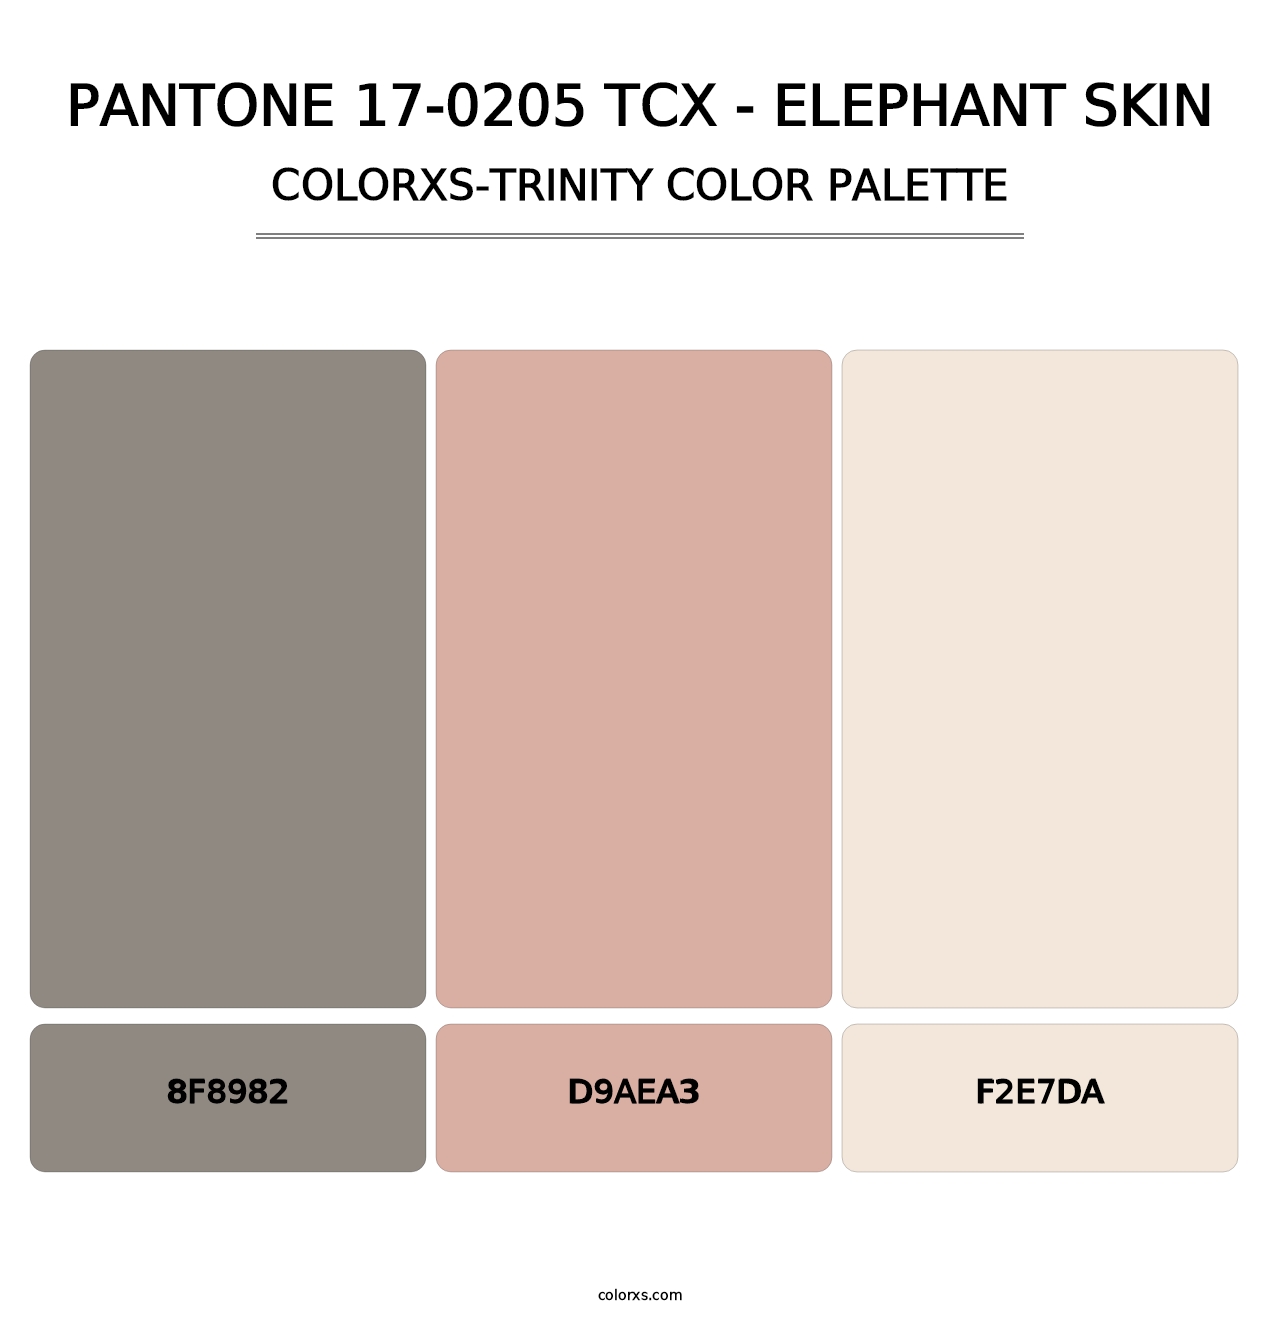 PANTONE 17-0205 TCX - Elephant Skin - Colorxs Trinity Palette